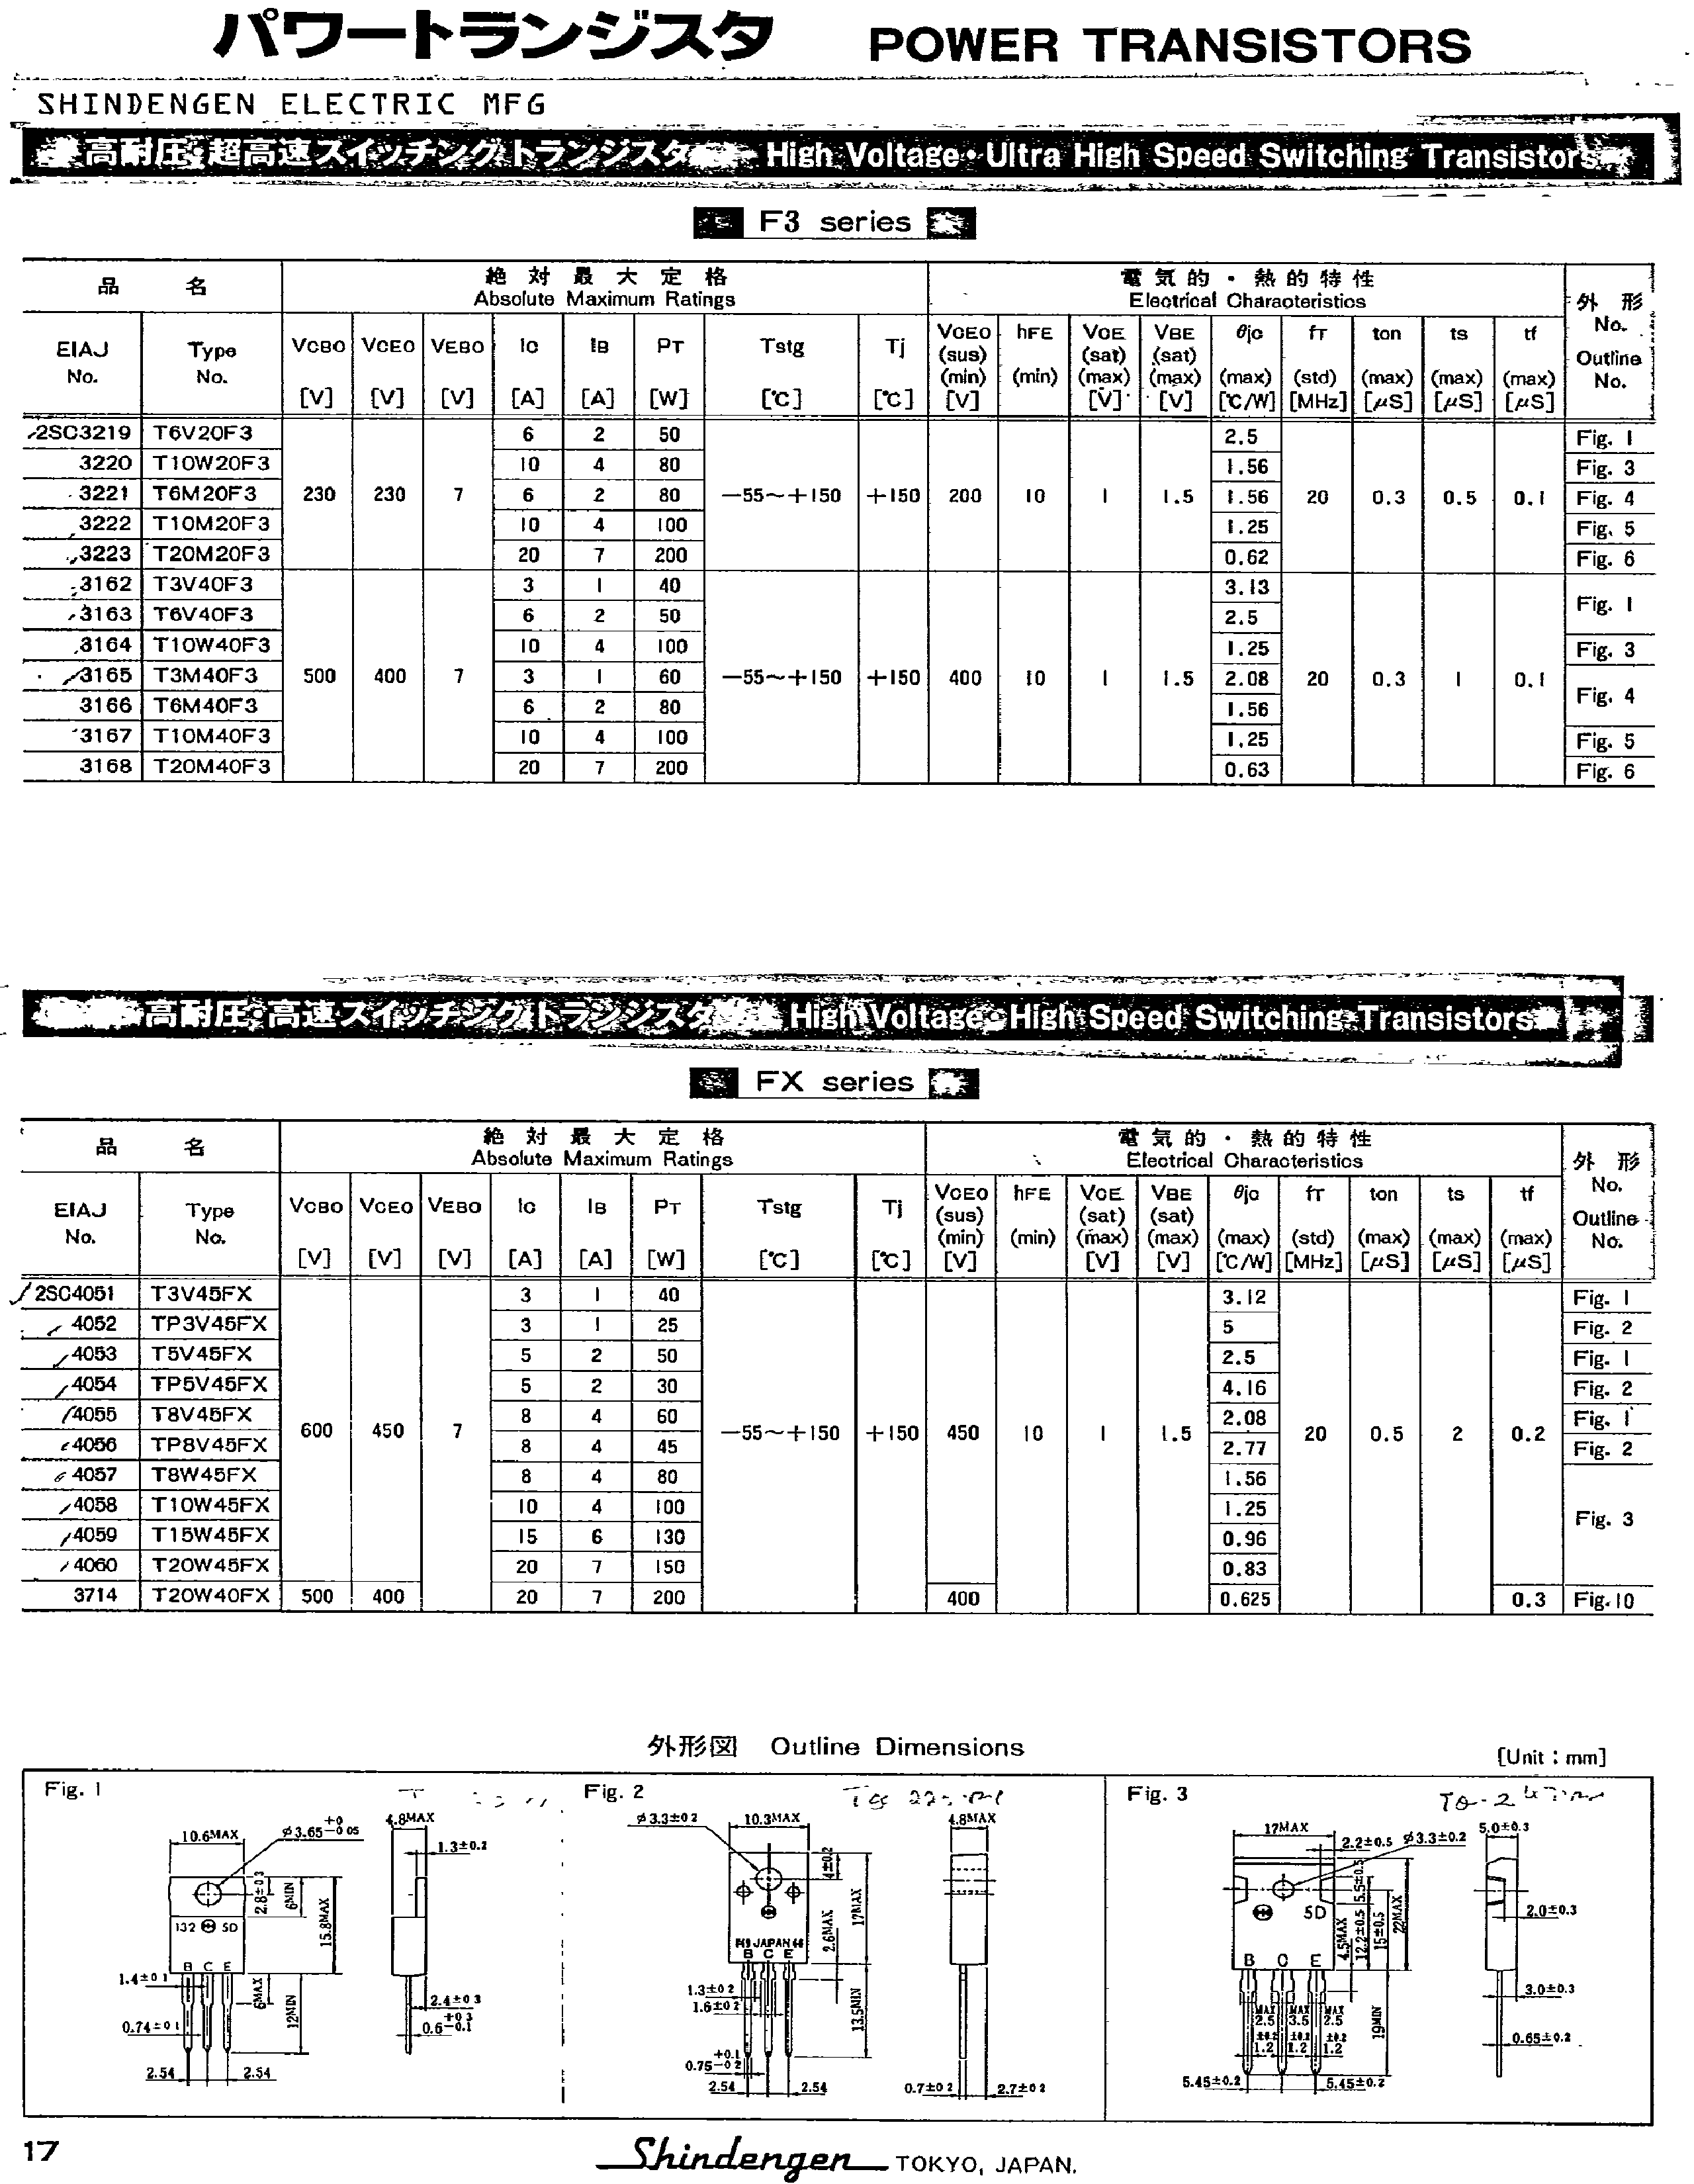 2SC3221 Shindengen Electric Mfg.Co.Ltd